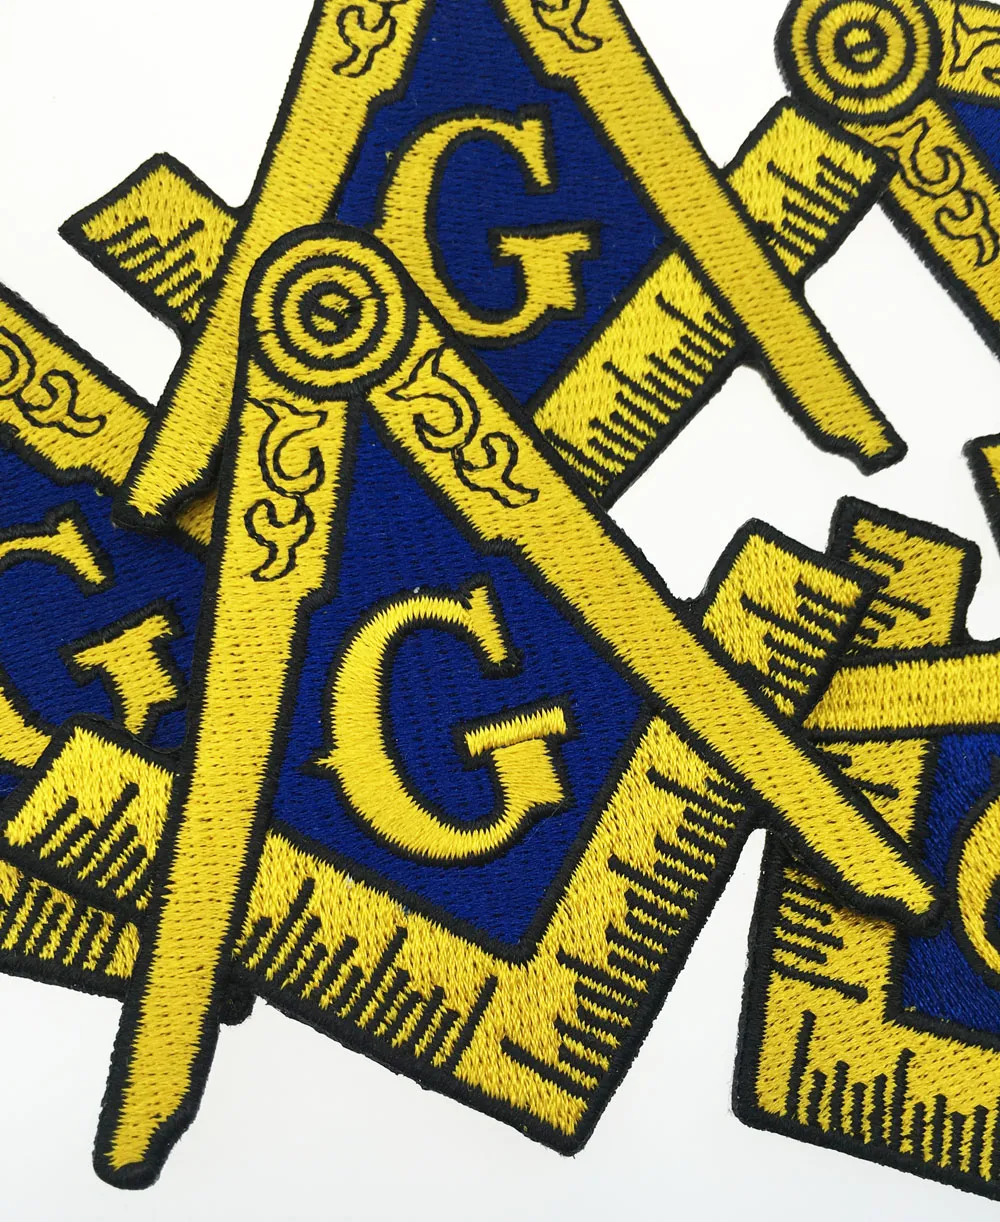 Masonic Logo Patch Embroidered Iron-On Clothing mason Lodge Emblem Mason G Square Compass Patch Sew On Any Garment230u